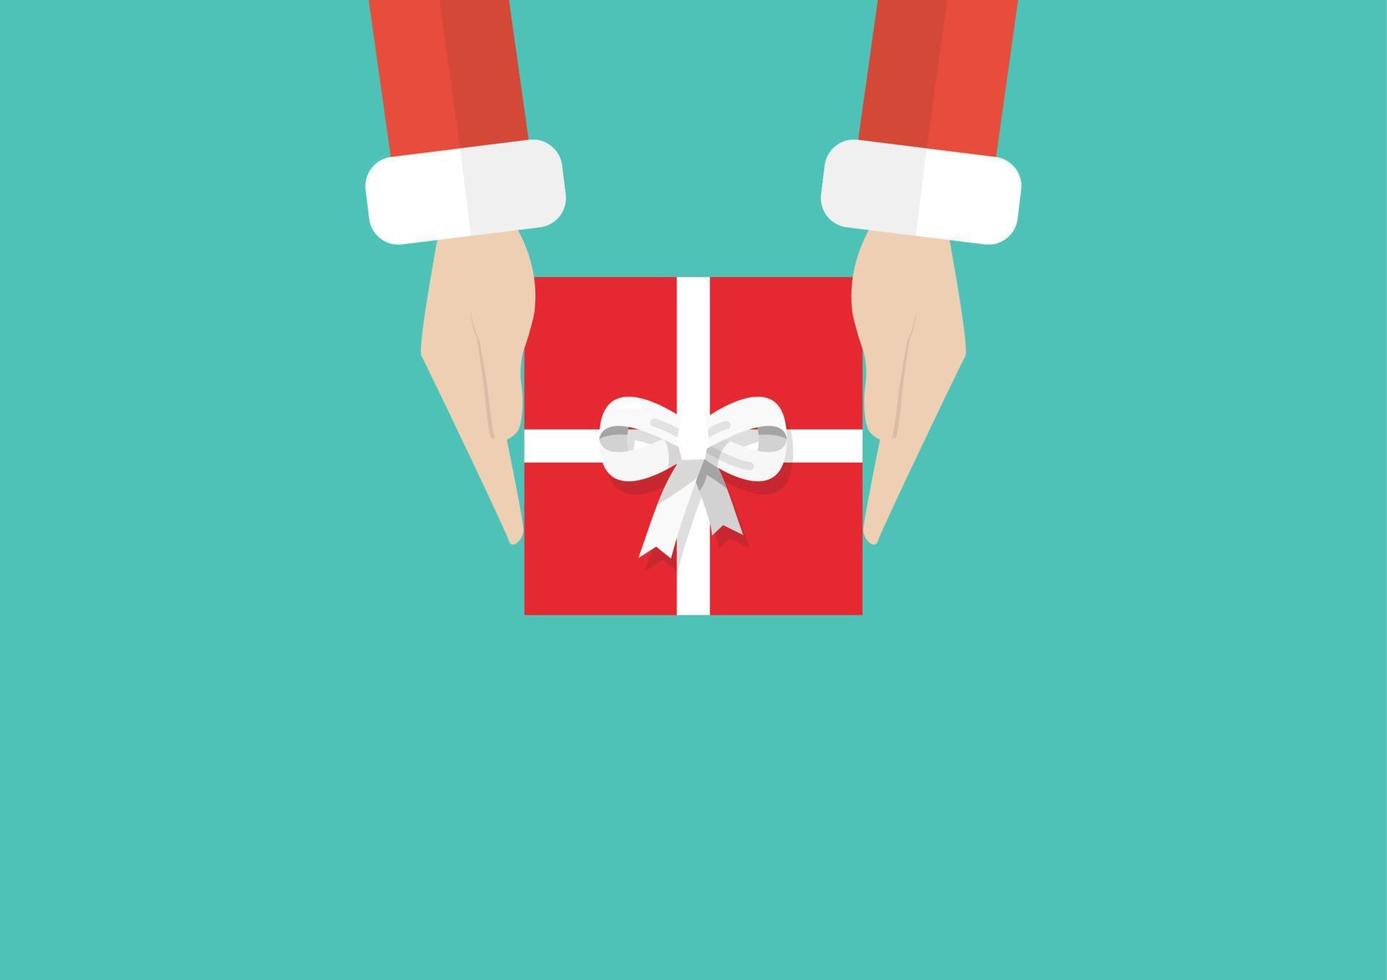 Santa hands holding gift or present box vector